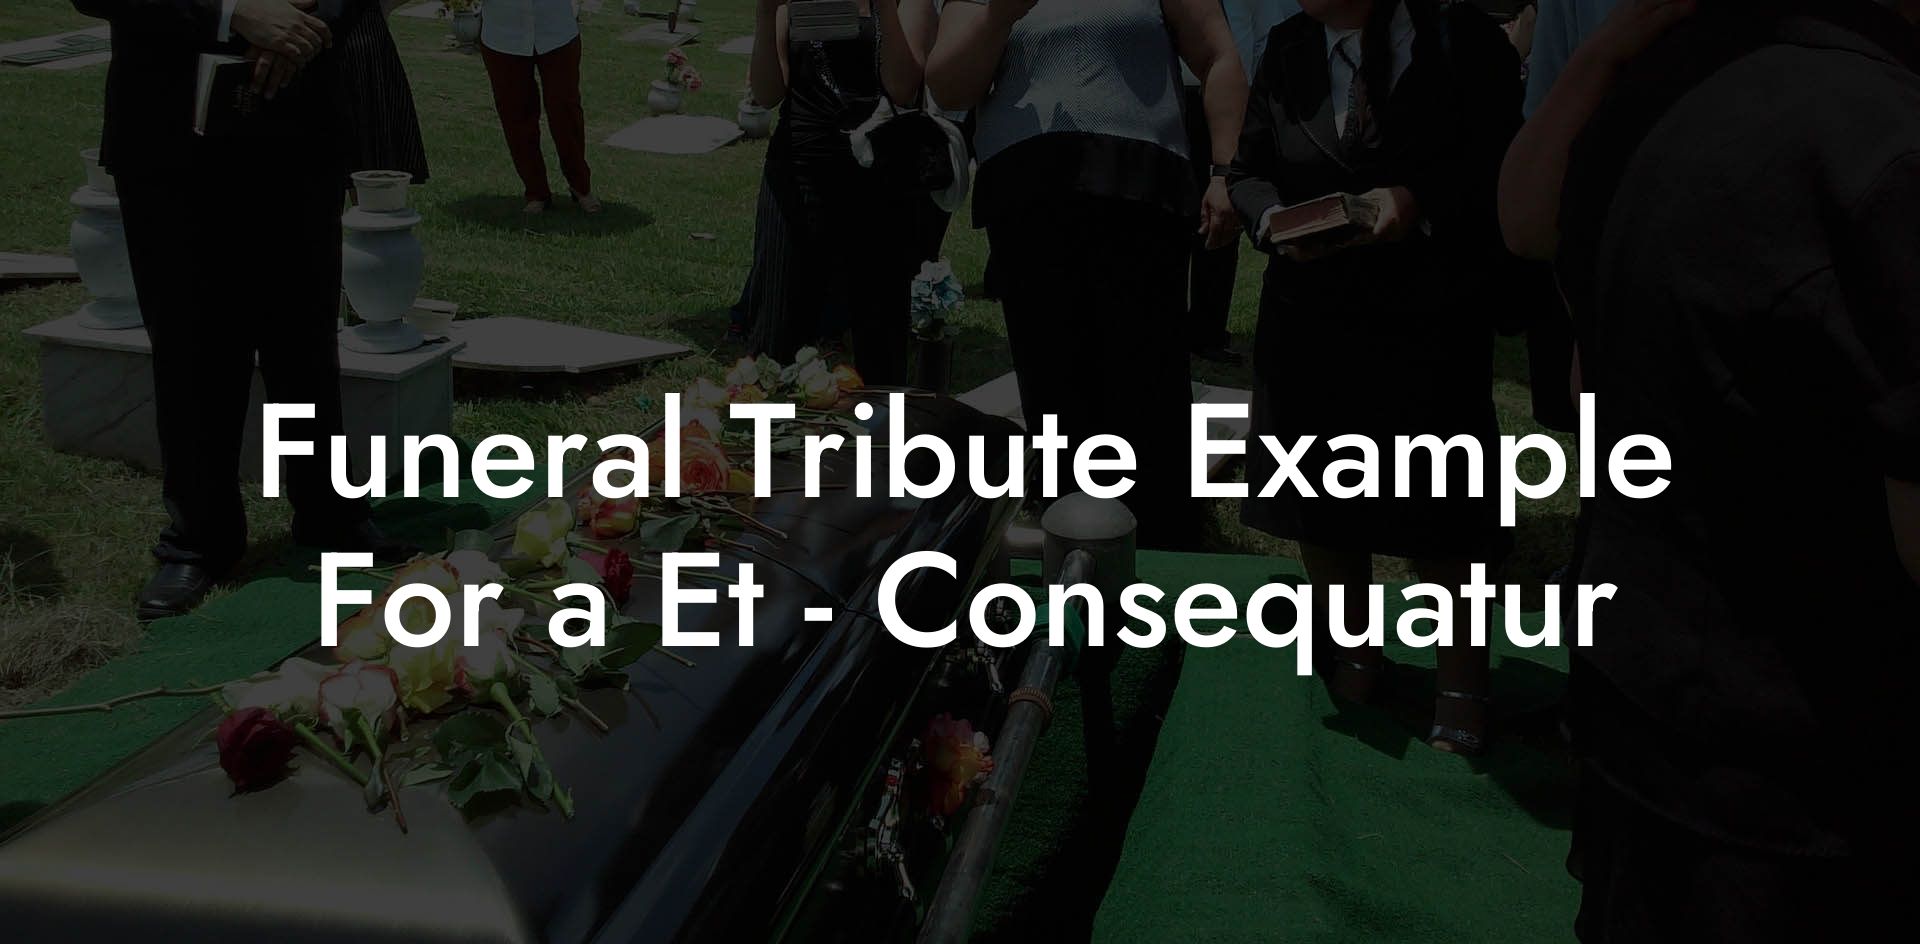 Funeral Tribute Example For a Et - Consequatur